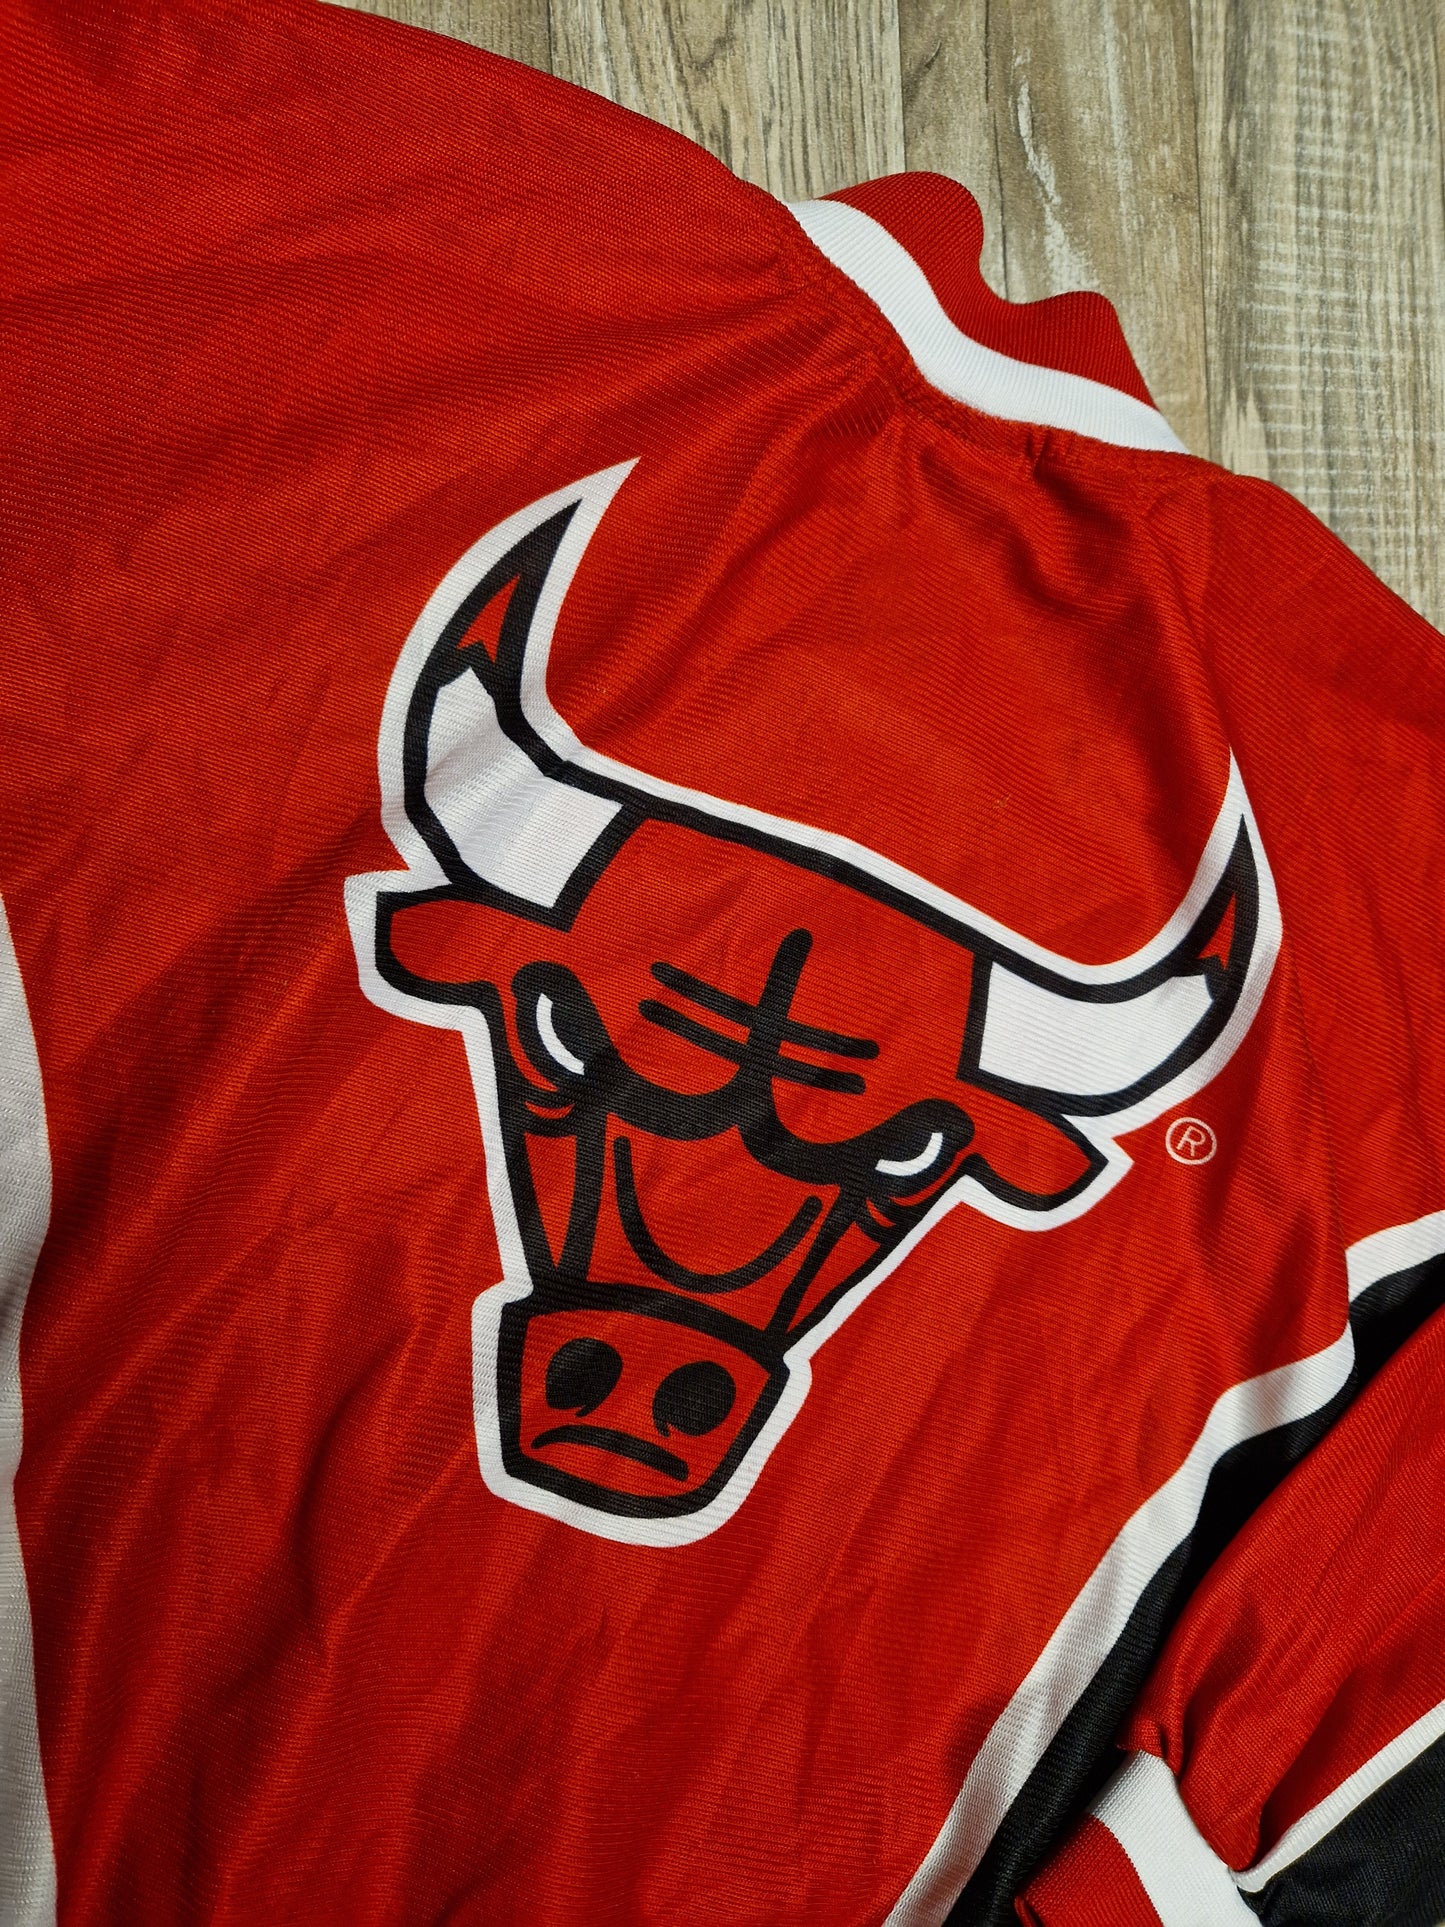 Chicago Bulls Warm Up Jacket Size Small